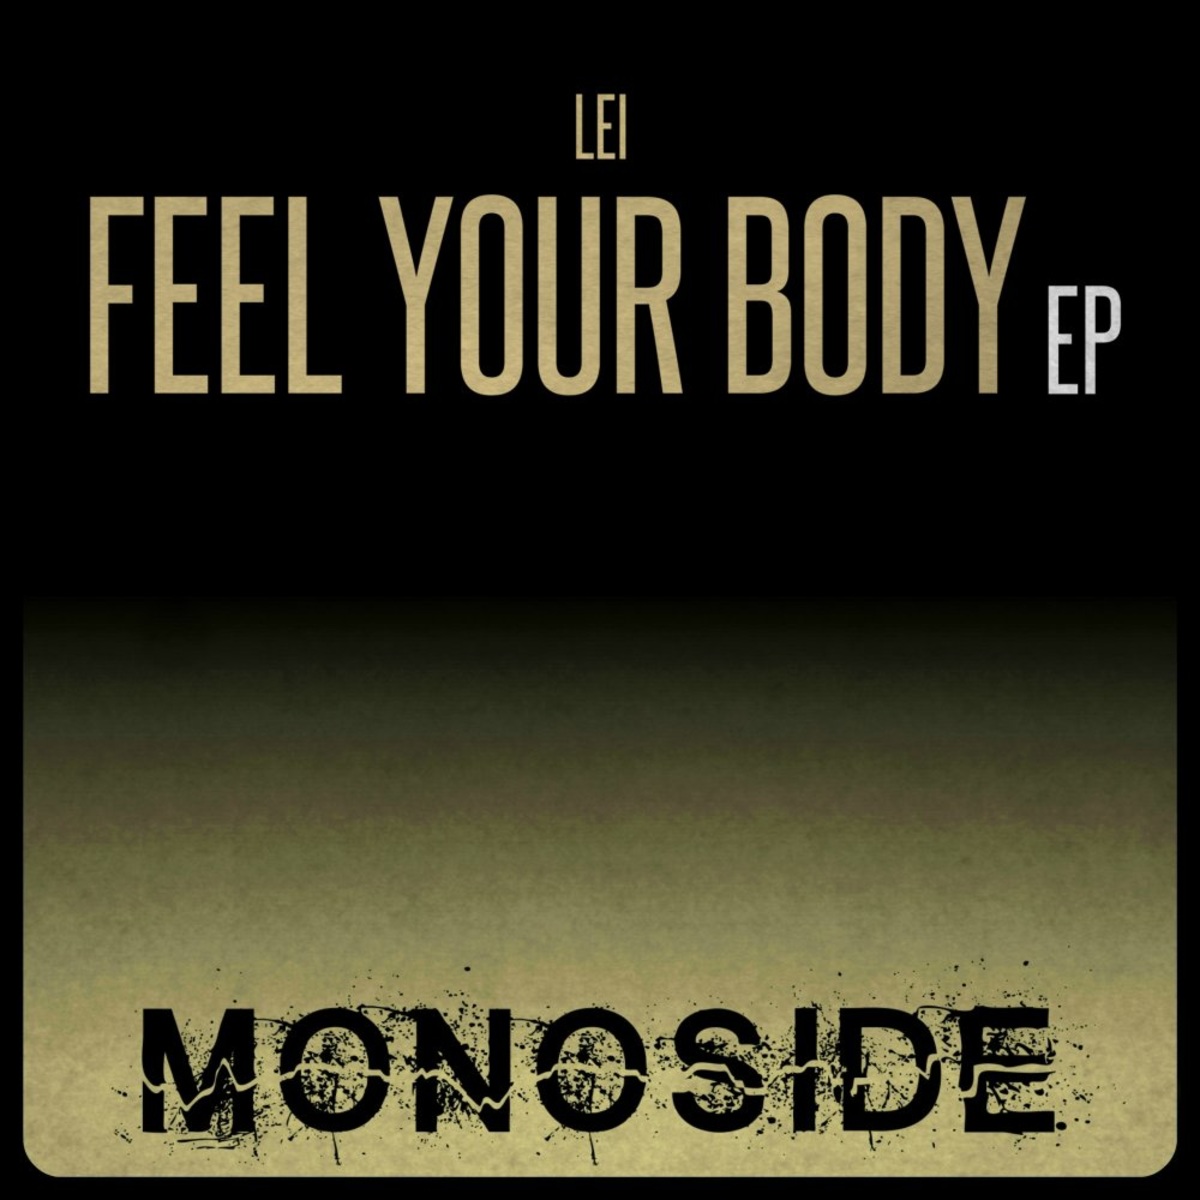 Lei - Feel Your Body EP [MS145]